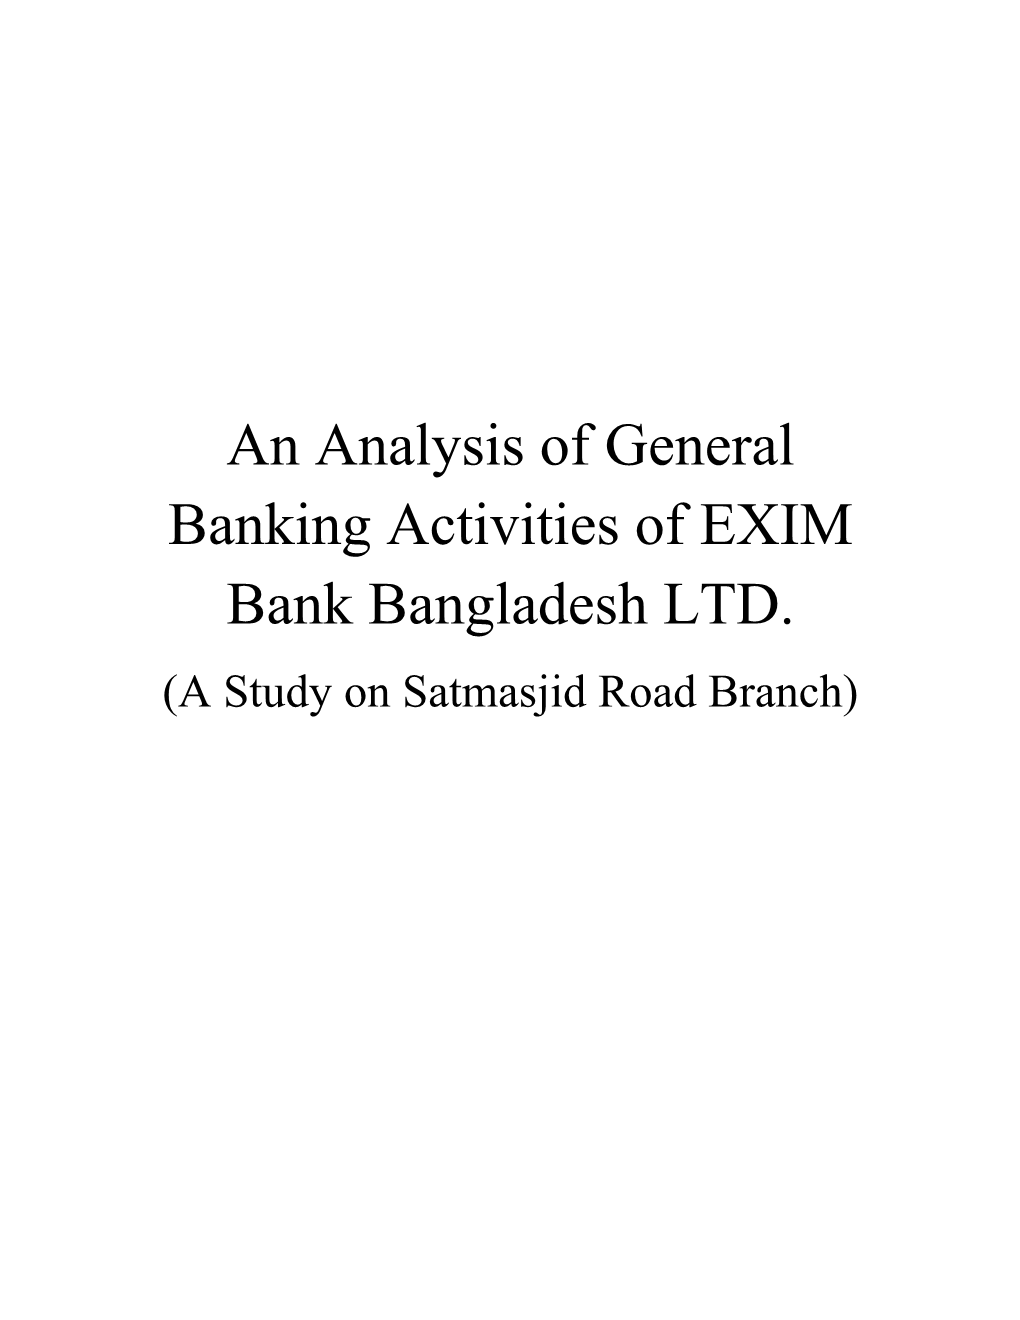 An Analysis of General Banking Activities of EXIM Bank Bangladesh LTD. (A Study on Satmasjid Road Branch)